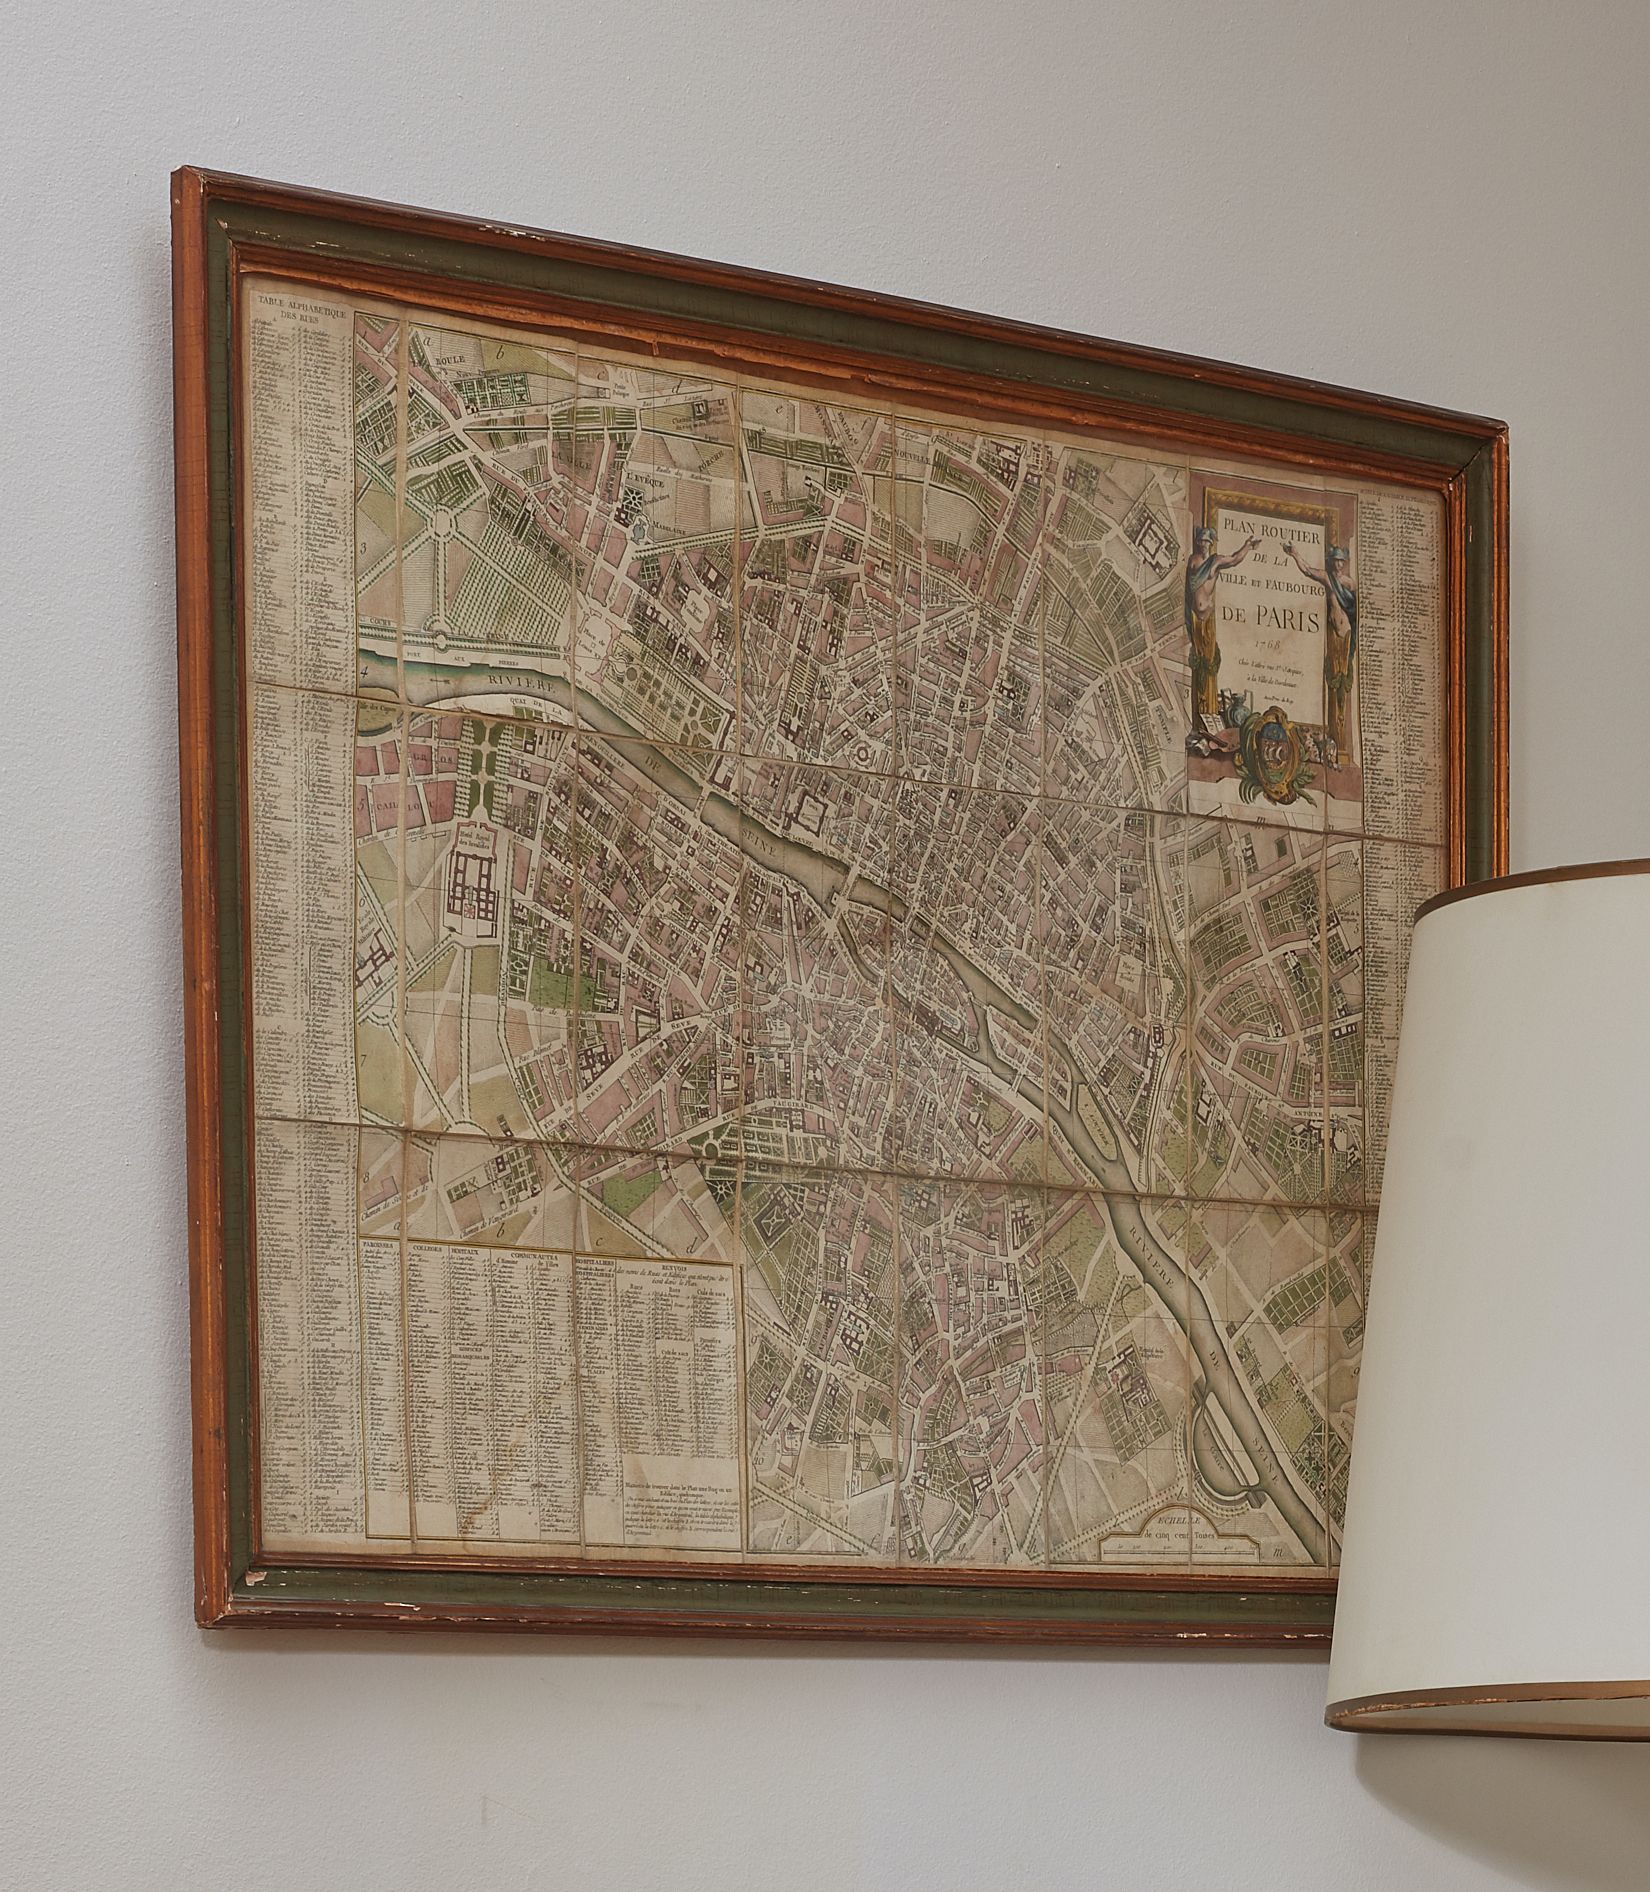 Null 巴黎城市和郊区路线图 1768年
55 x 77 cm